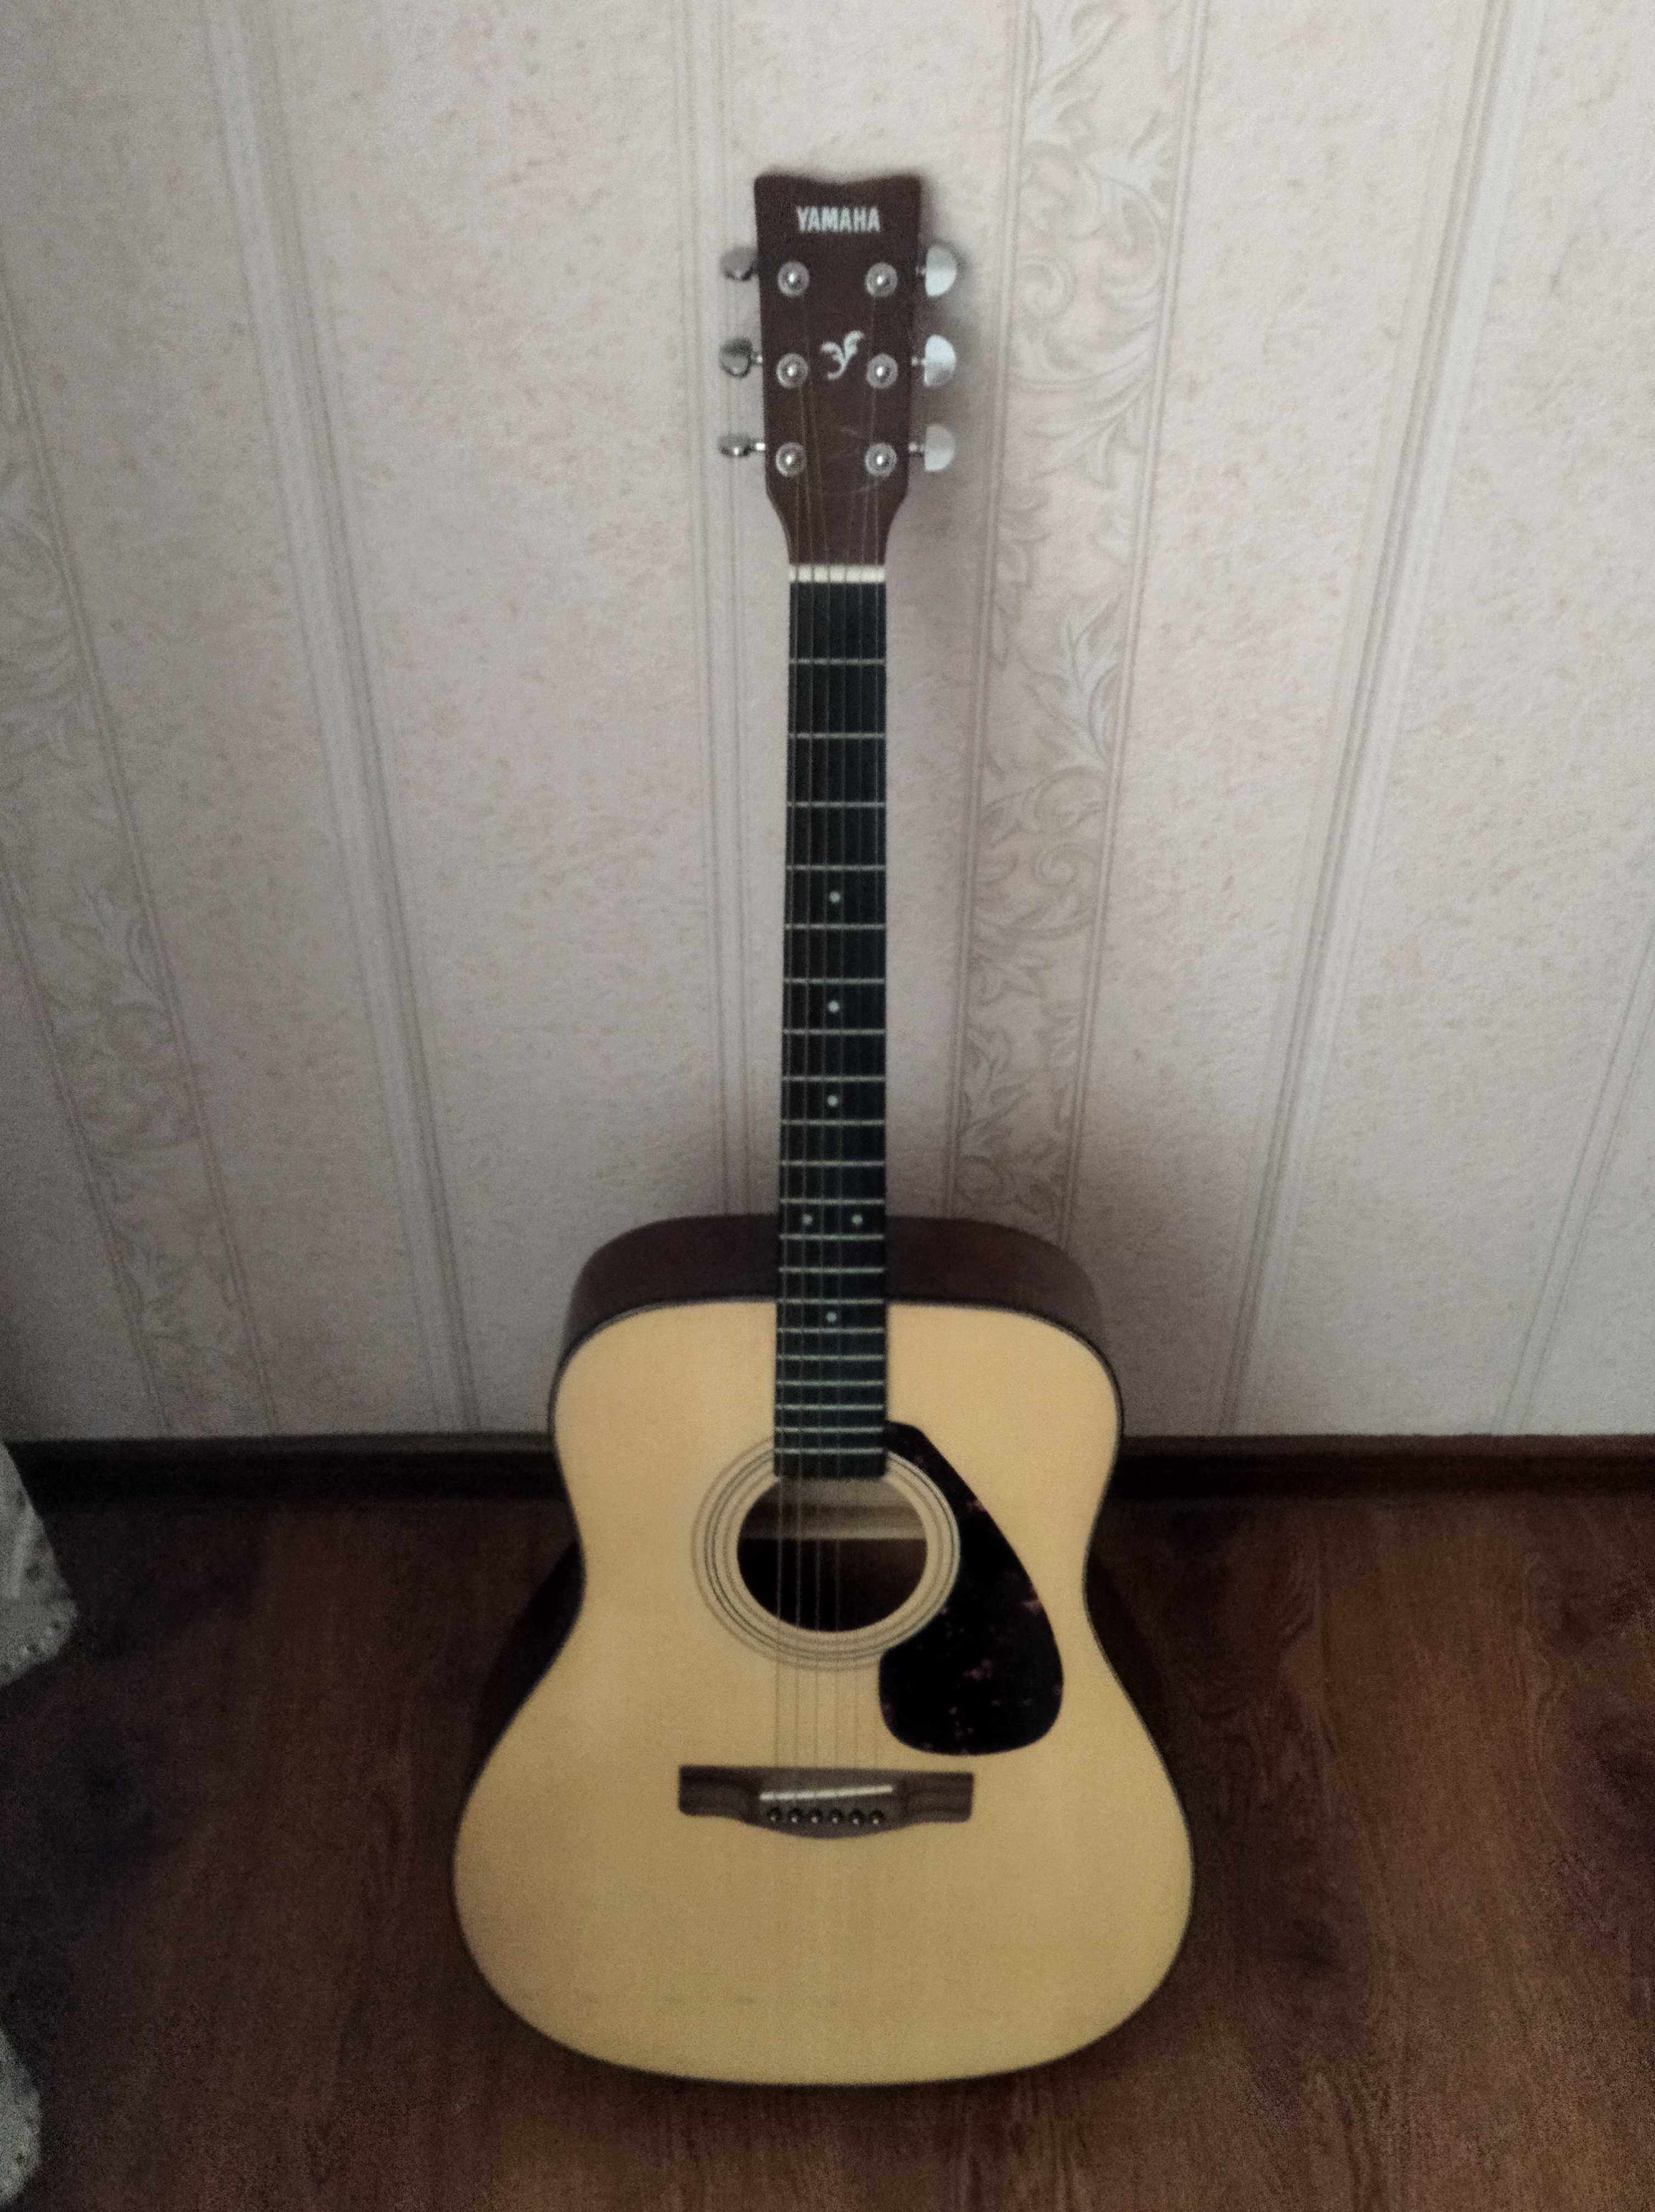 Гитара Yamaha f310